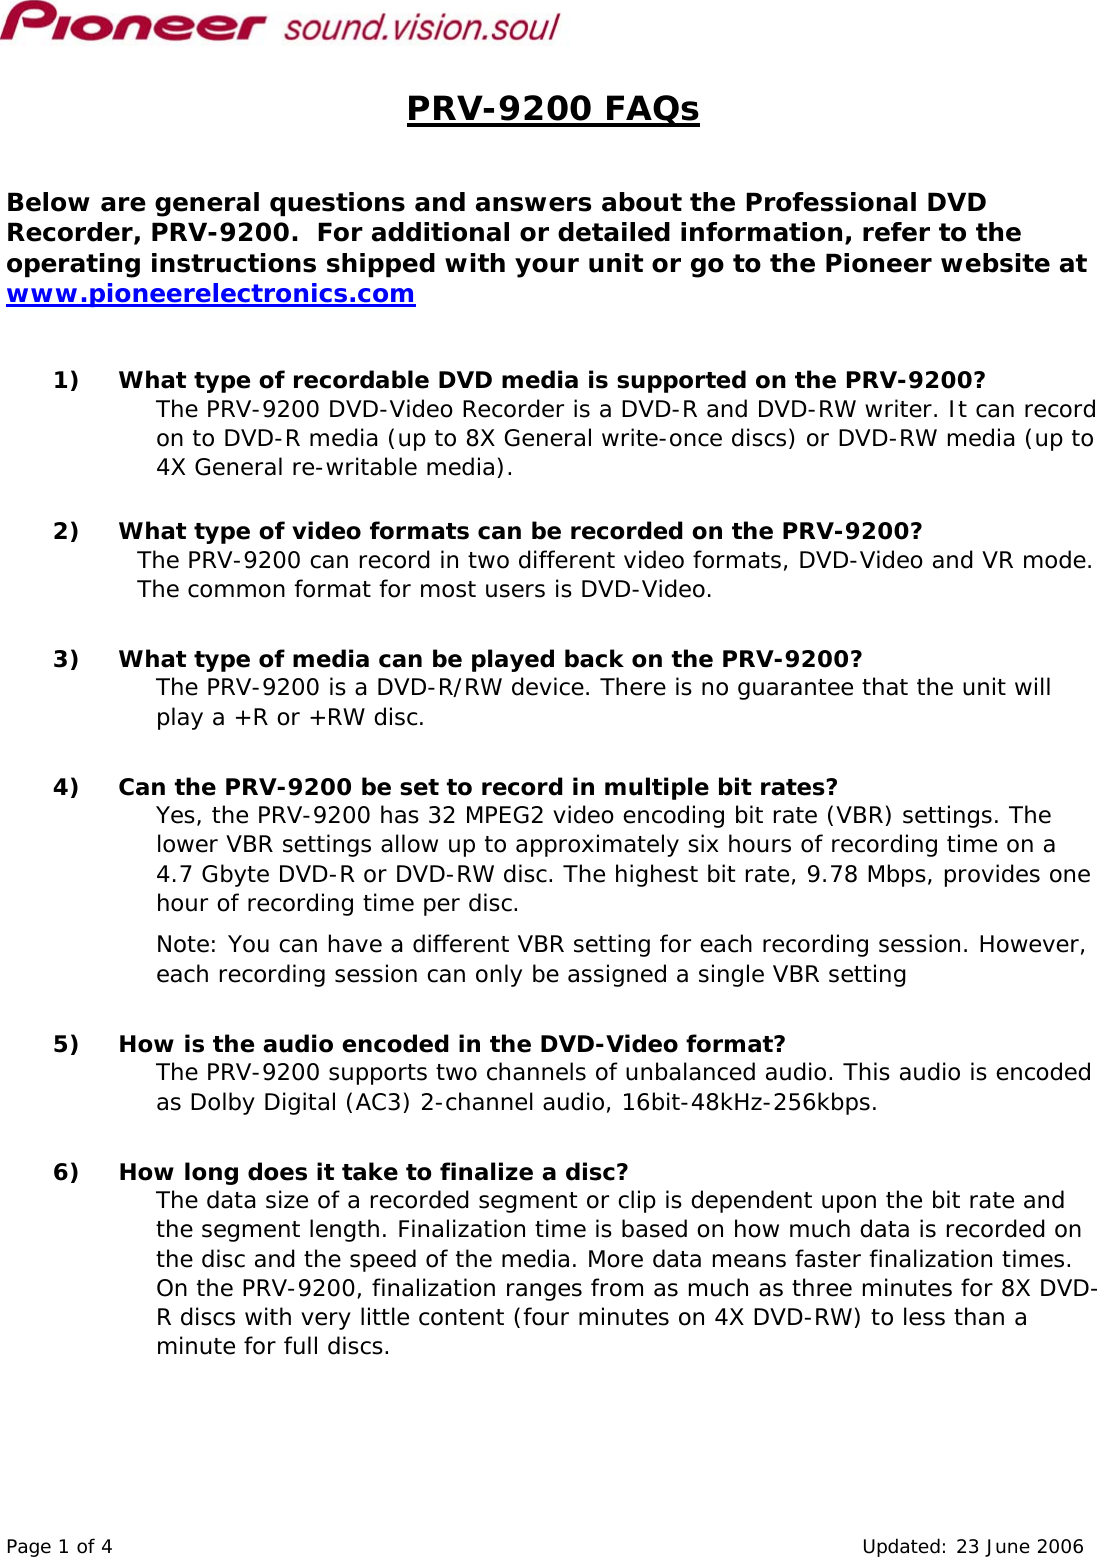 Page 1 of 4 - Pioneer Pioneer-Professional-Dvd-Recorder-Prv-9200-Users-Manual- R11 FAQ  Pioneer-professional-dvd-recorder-prv-9200-users-manual